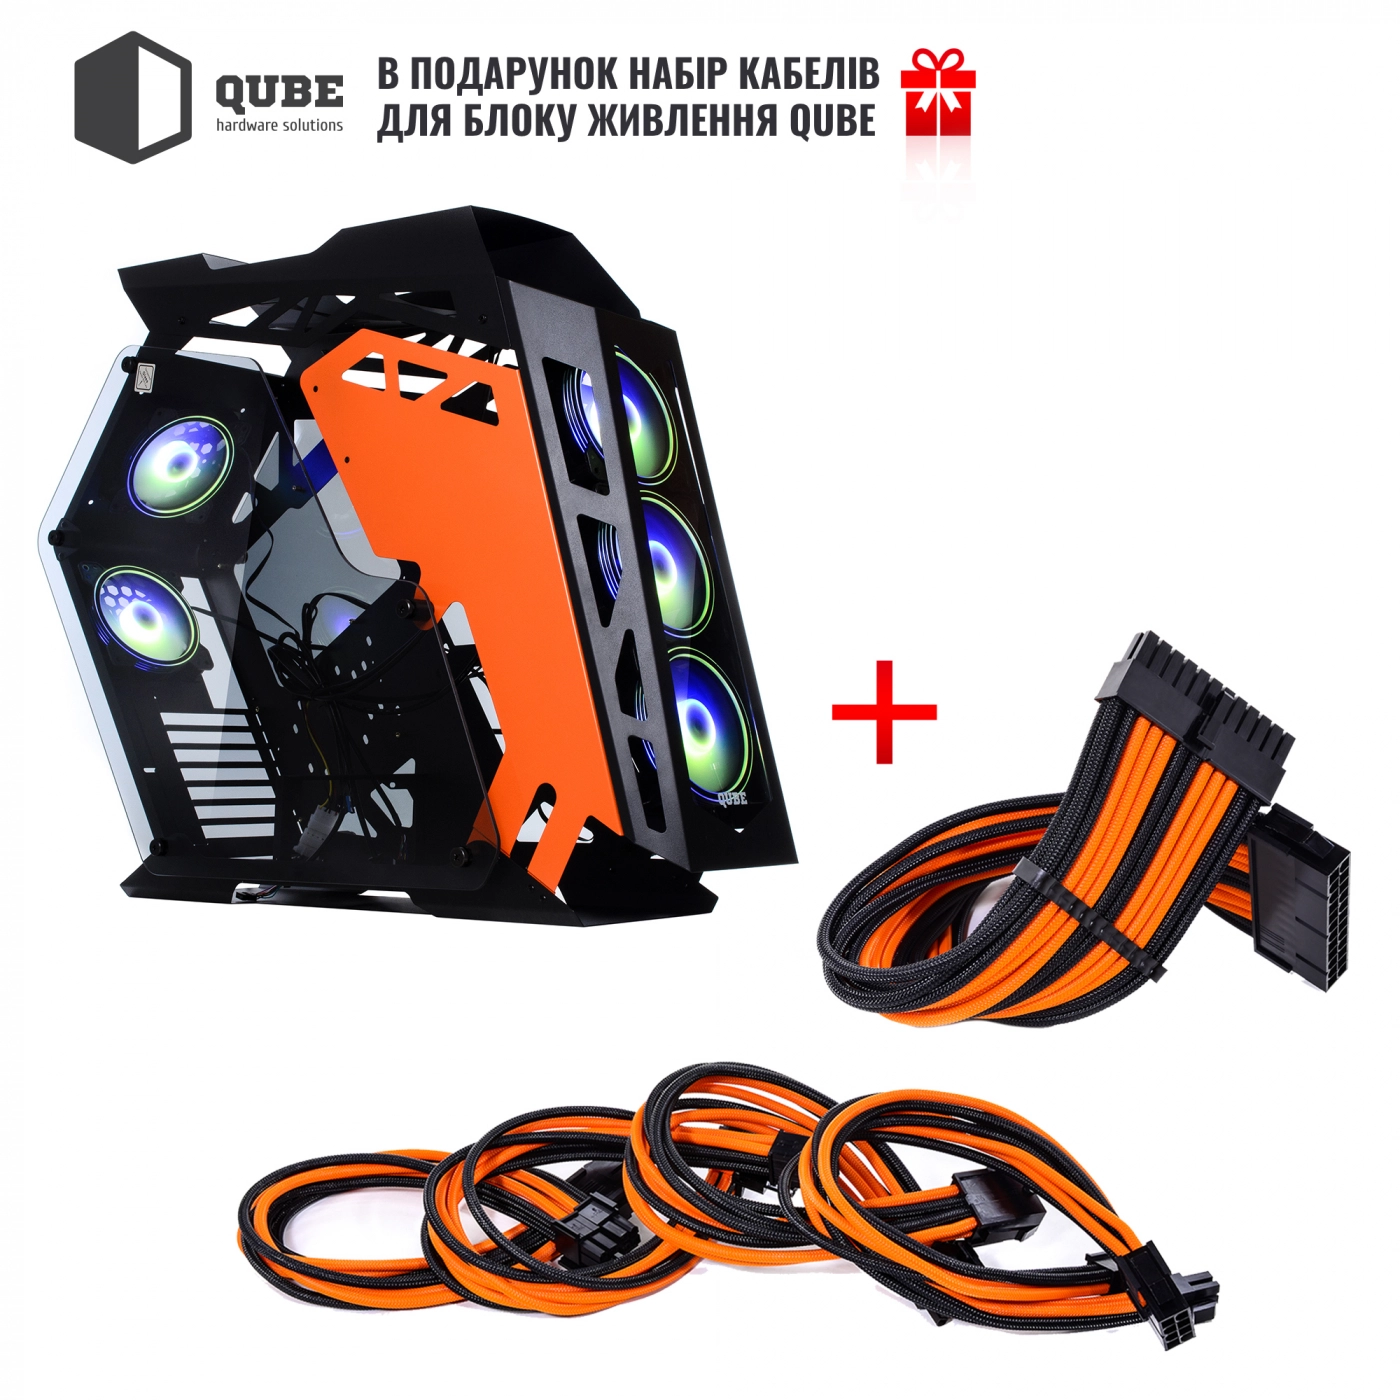 Купити Корпус QUBE STALKER Max Black-Orange (STALKER_FMBE3) + набор кабелей для БП QUBE Black-Orangе (QBWSET24P2x8P2x8PBO) - фото 2